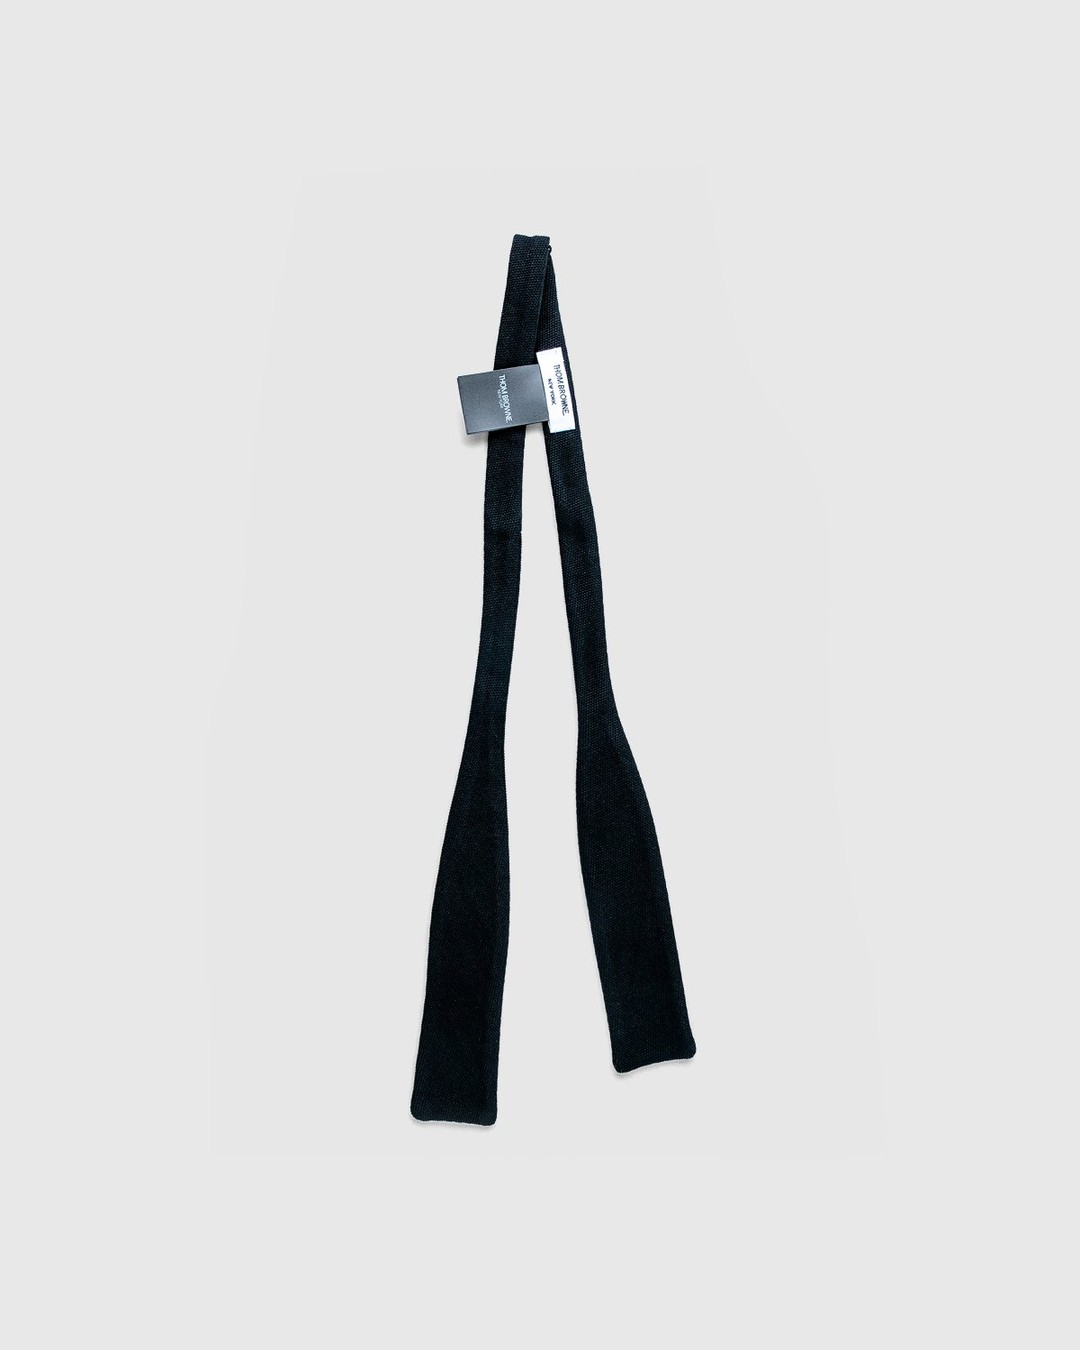 Thom Browne x Highsnobiety – Classic Bow Tie Black - Ties - Black - Image 2